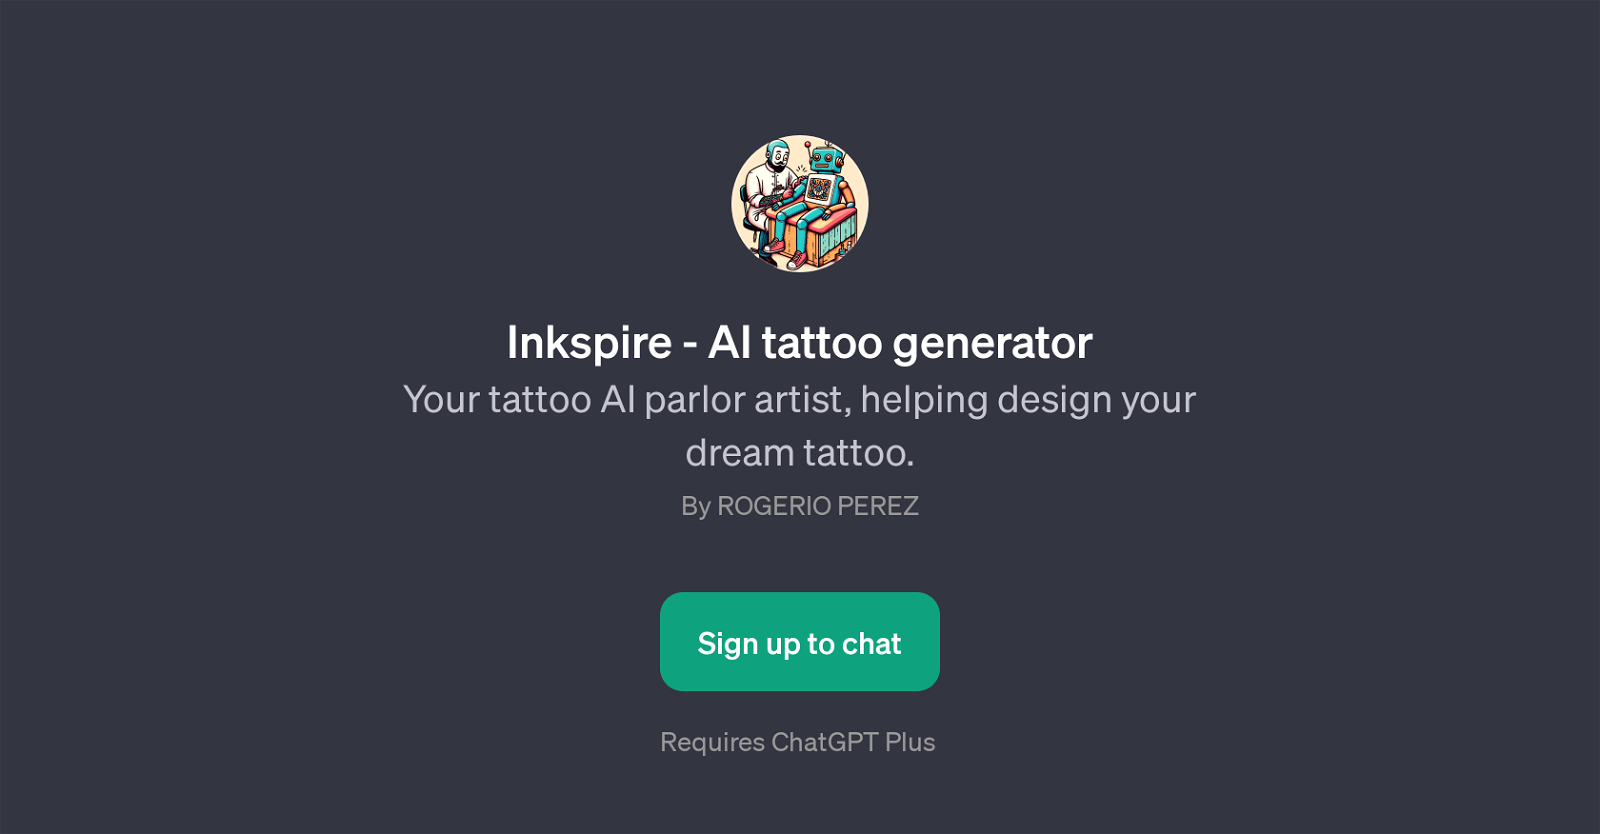 Inkspire - AI tattoo generator website